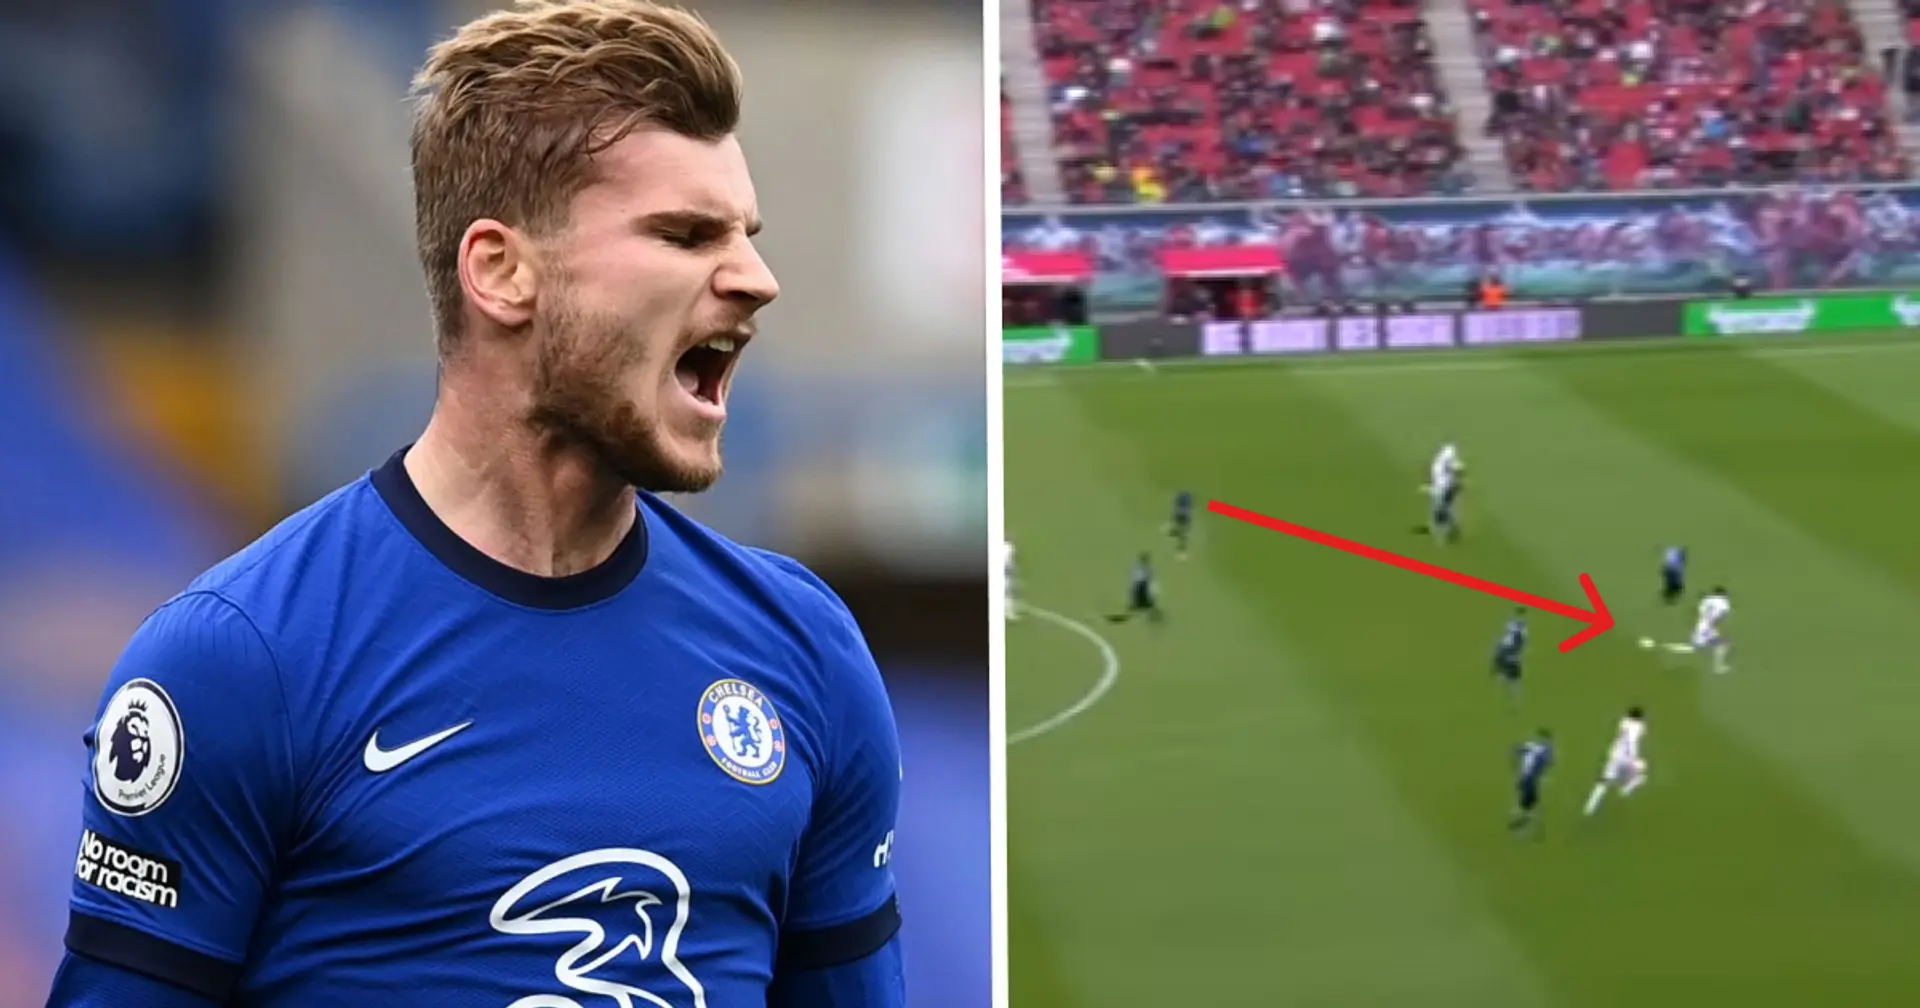 Nkunku bags a brace in latest Leipzig game, one goal is Werner-like (video)